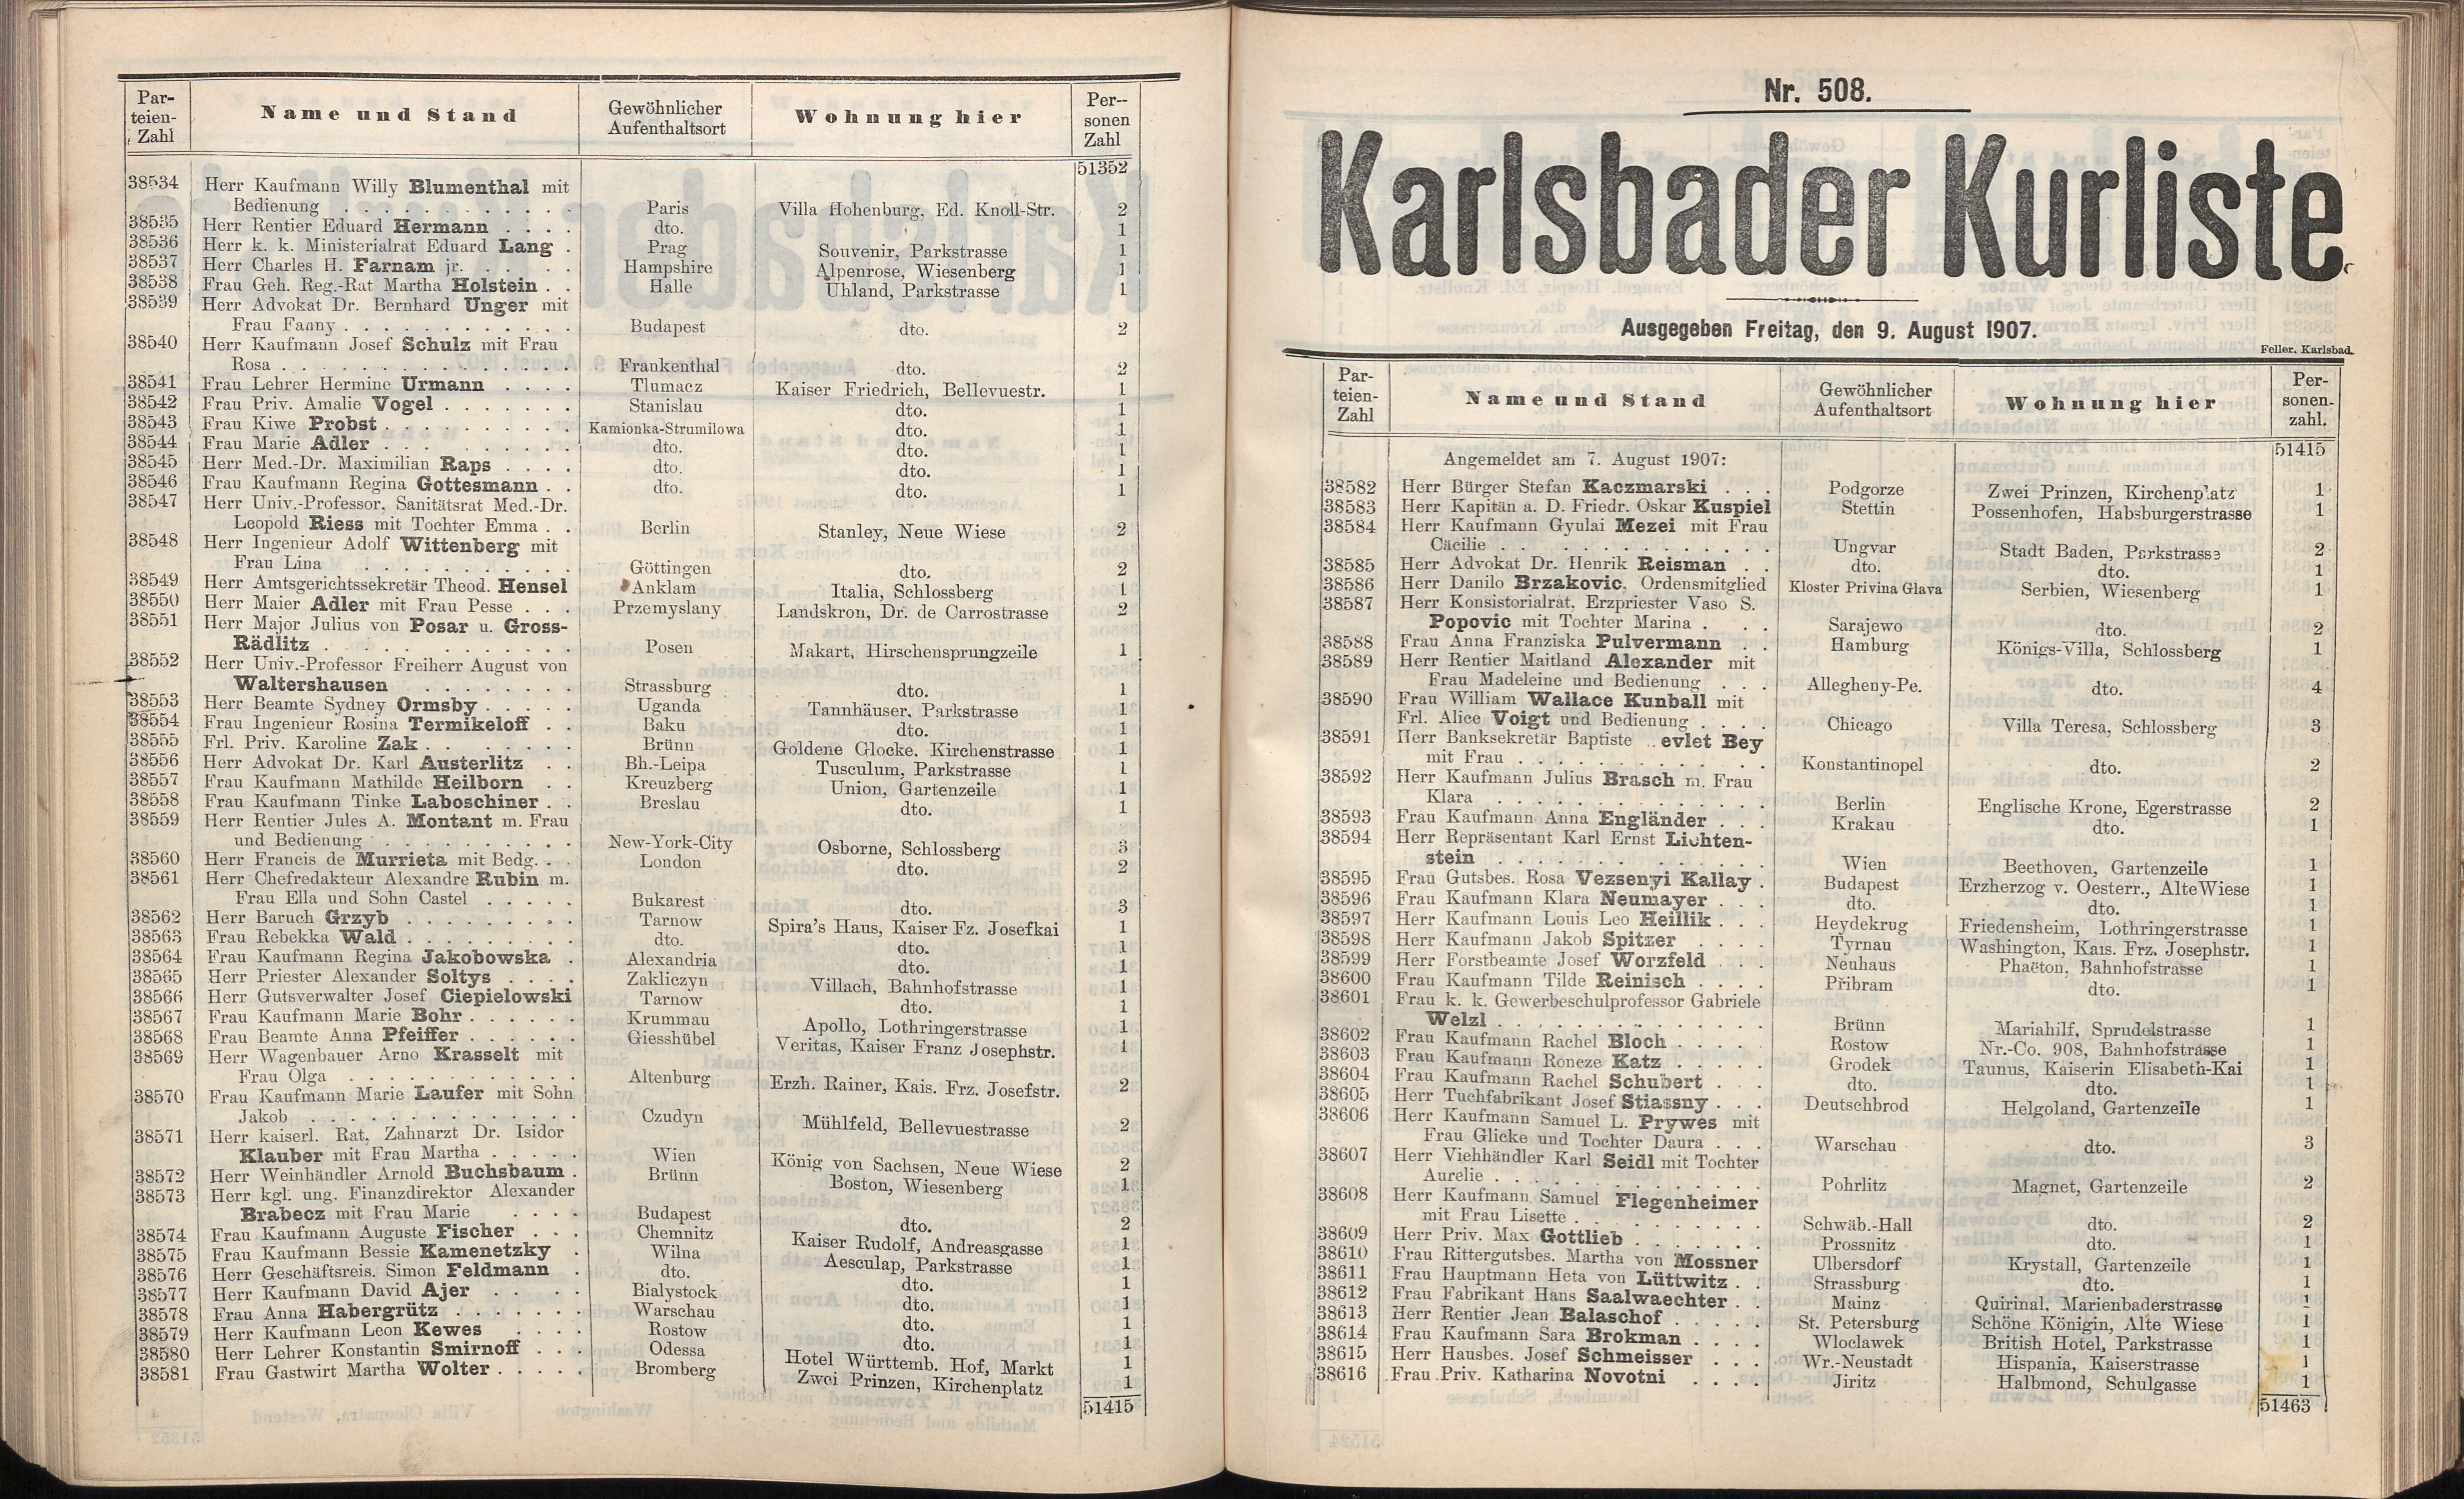 622. soap-kv_knihovna_karlsbader-kurliste-1907_6230